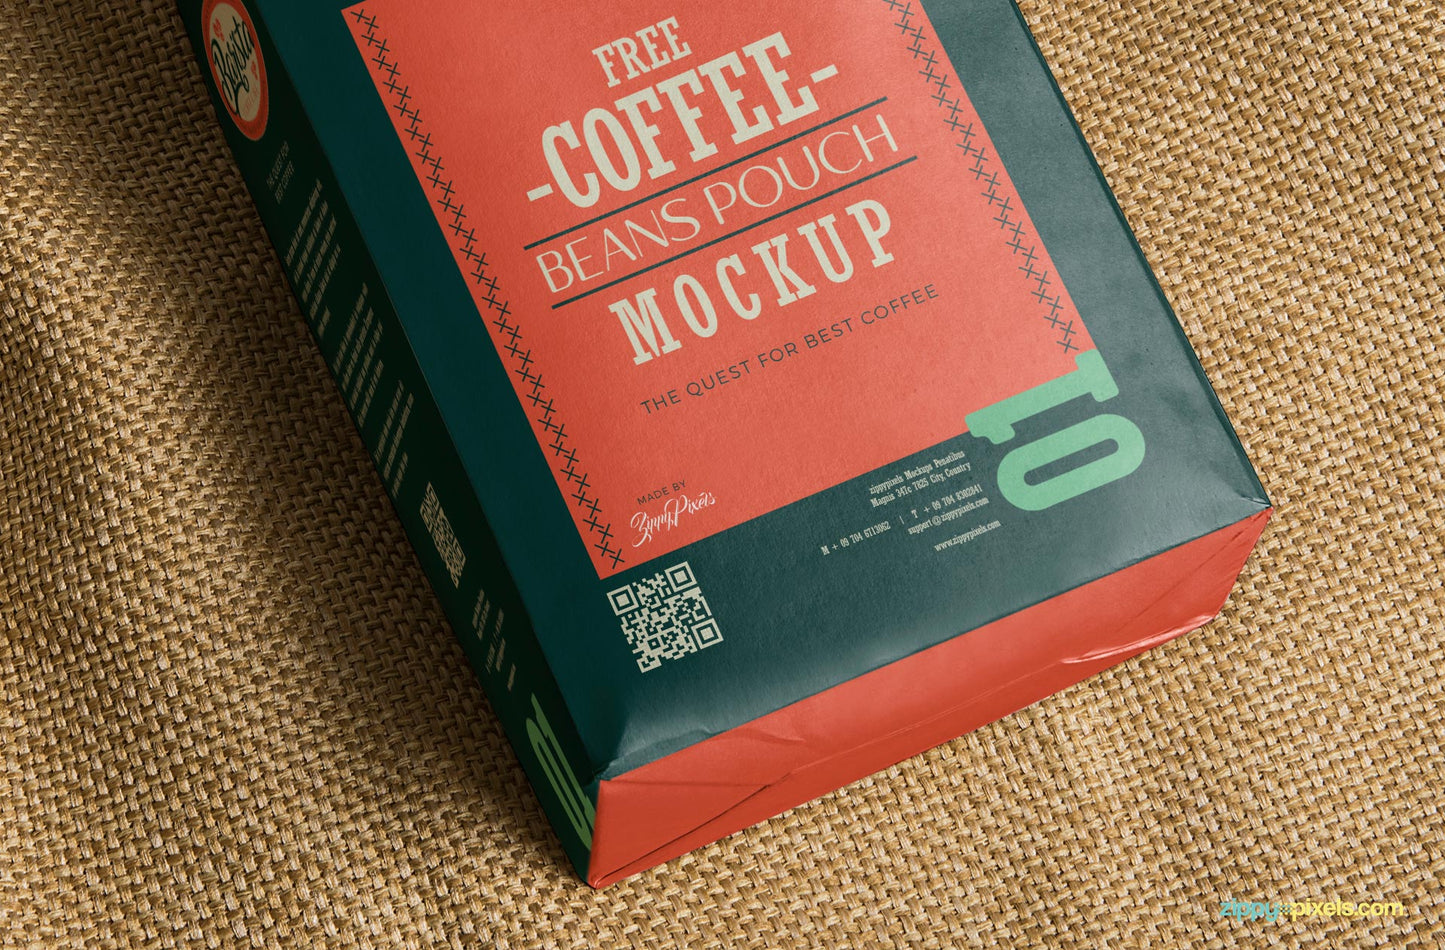 Free Classic Coffee Bag Mockup